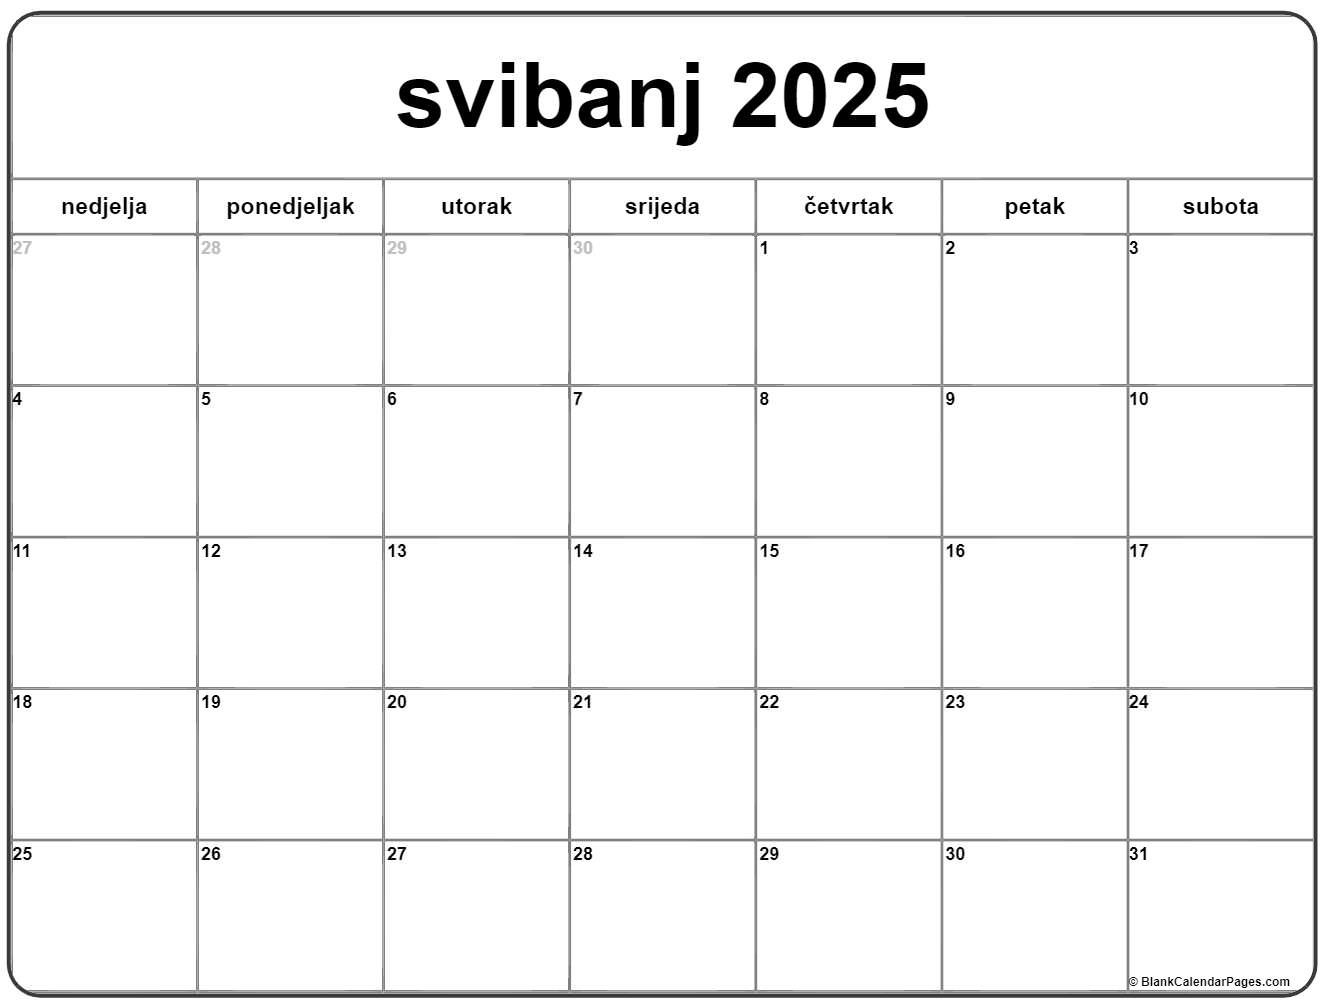 Офф календарь 2023. План календарь на 2023. Календарь на январь 2023 года. Календарь 2023 схема. Календарь на 2023 год крупный планирование.